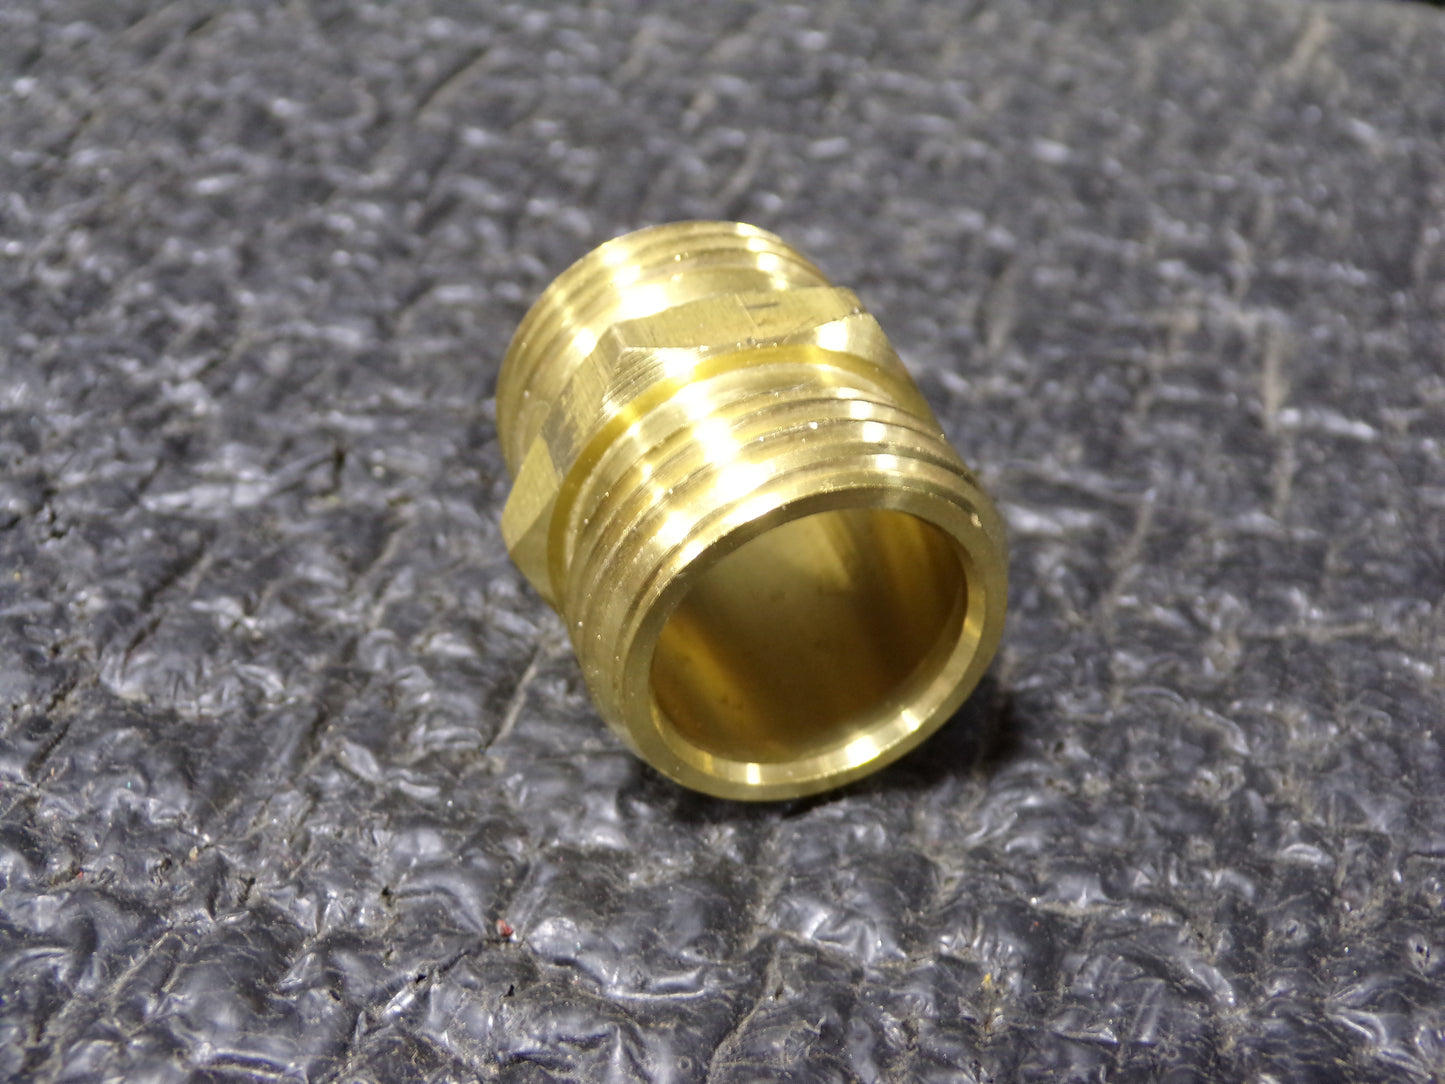 WESTWARD Garden Hose Adapter, Fitting Material Brass x Brass, Fitting Size 3/4 in x 3/4 in (CR00187-BT26)